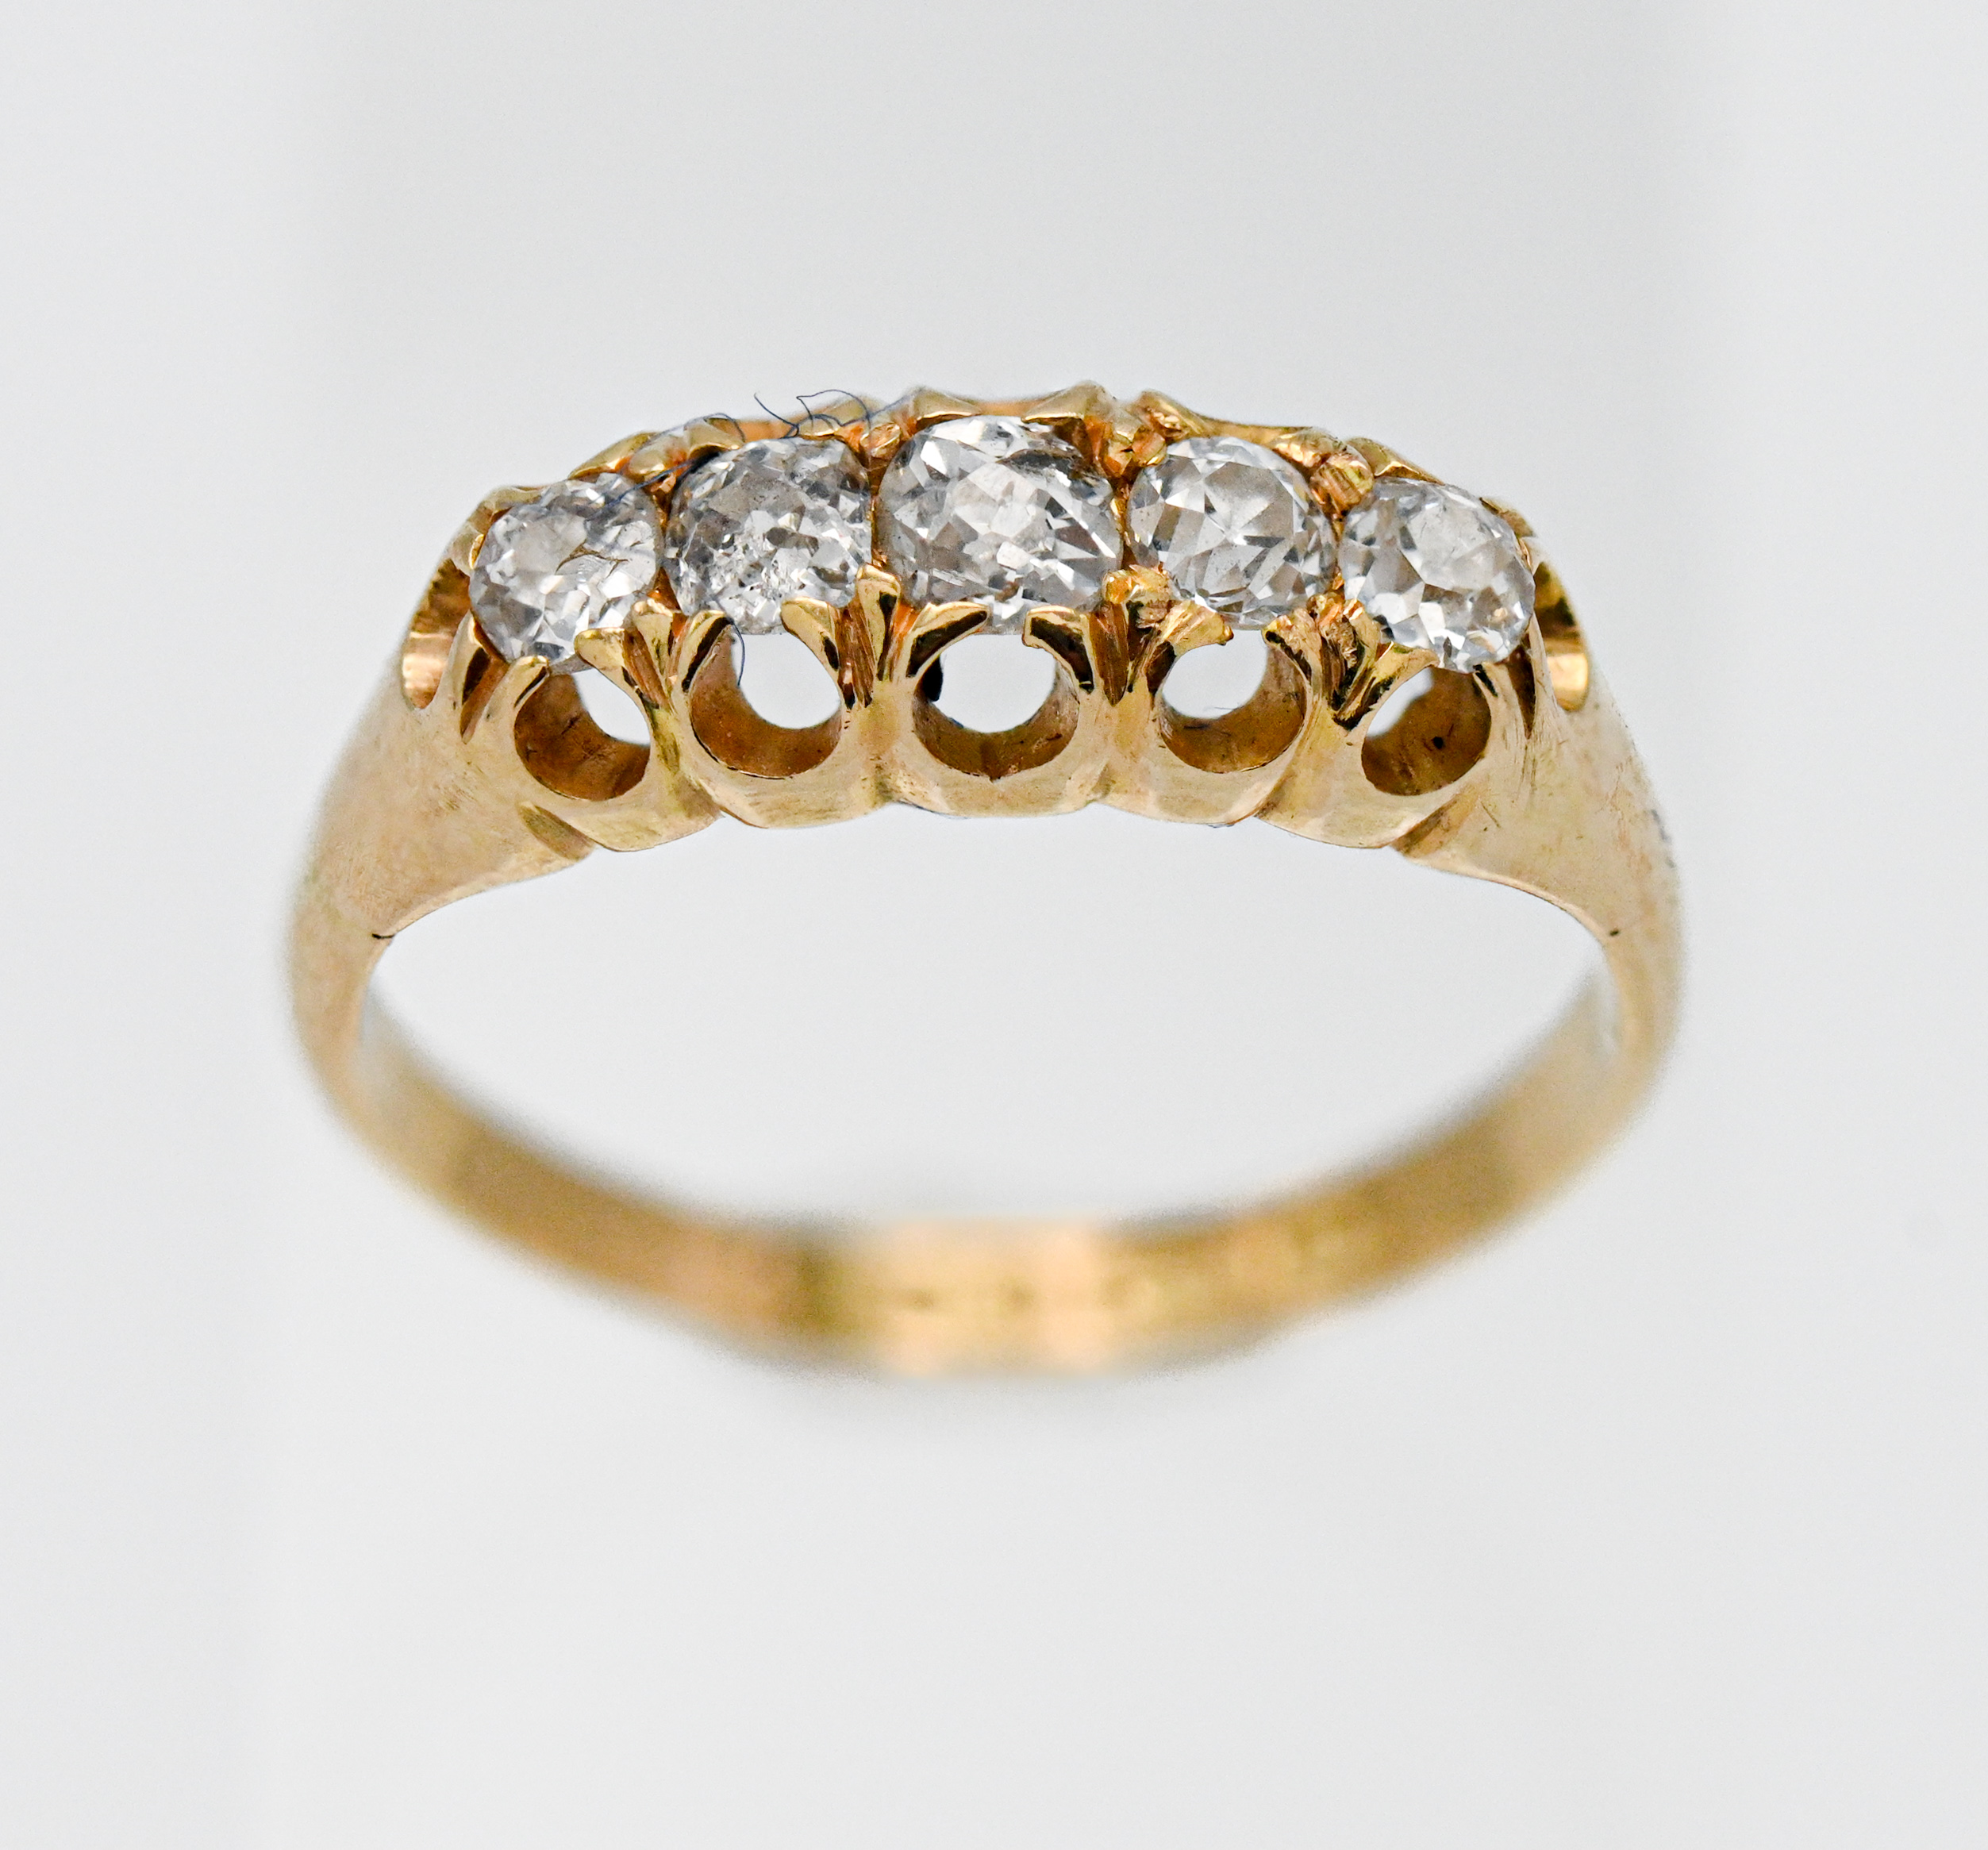 An 18ct yellow gold five stone diamond ring, (old cut diamonds), size K.